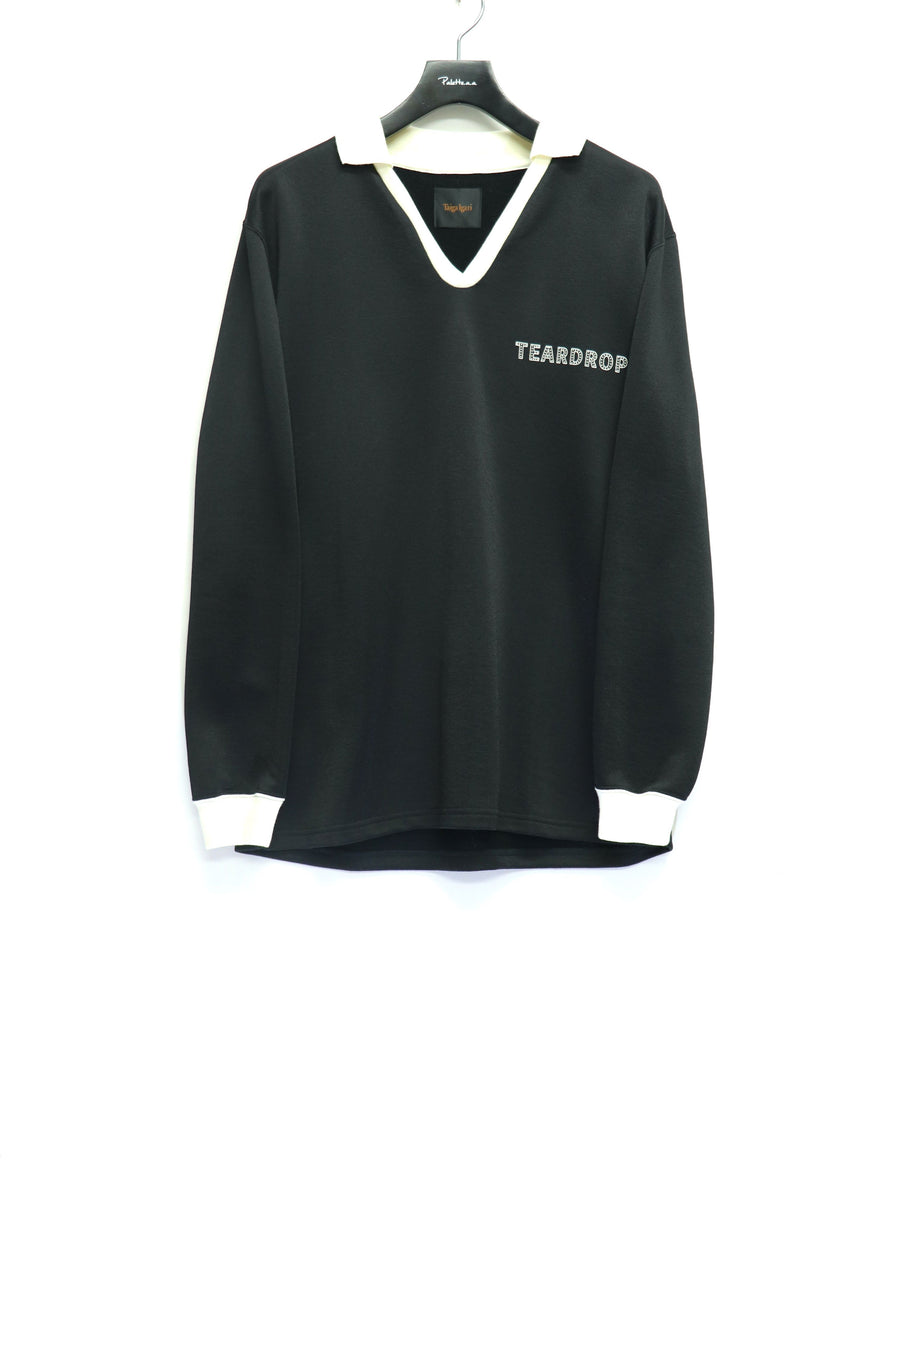 Taiga Igari  Two-Tone Racing Shirt(BLACK  OFF WHITE)